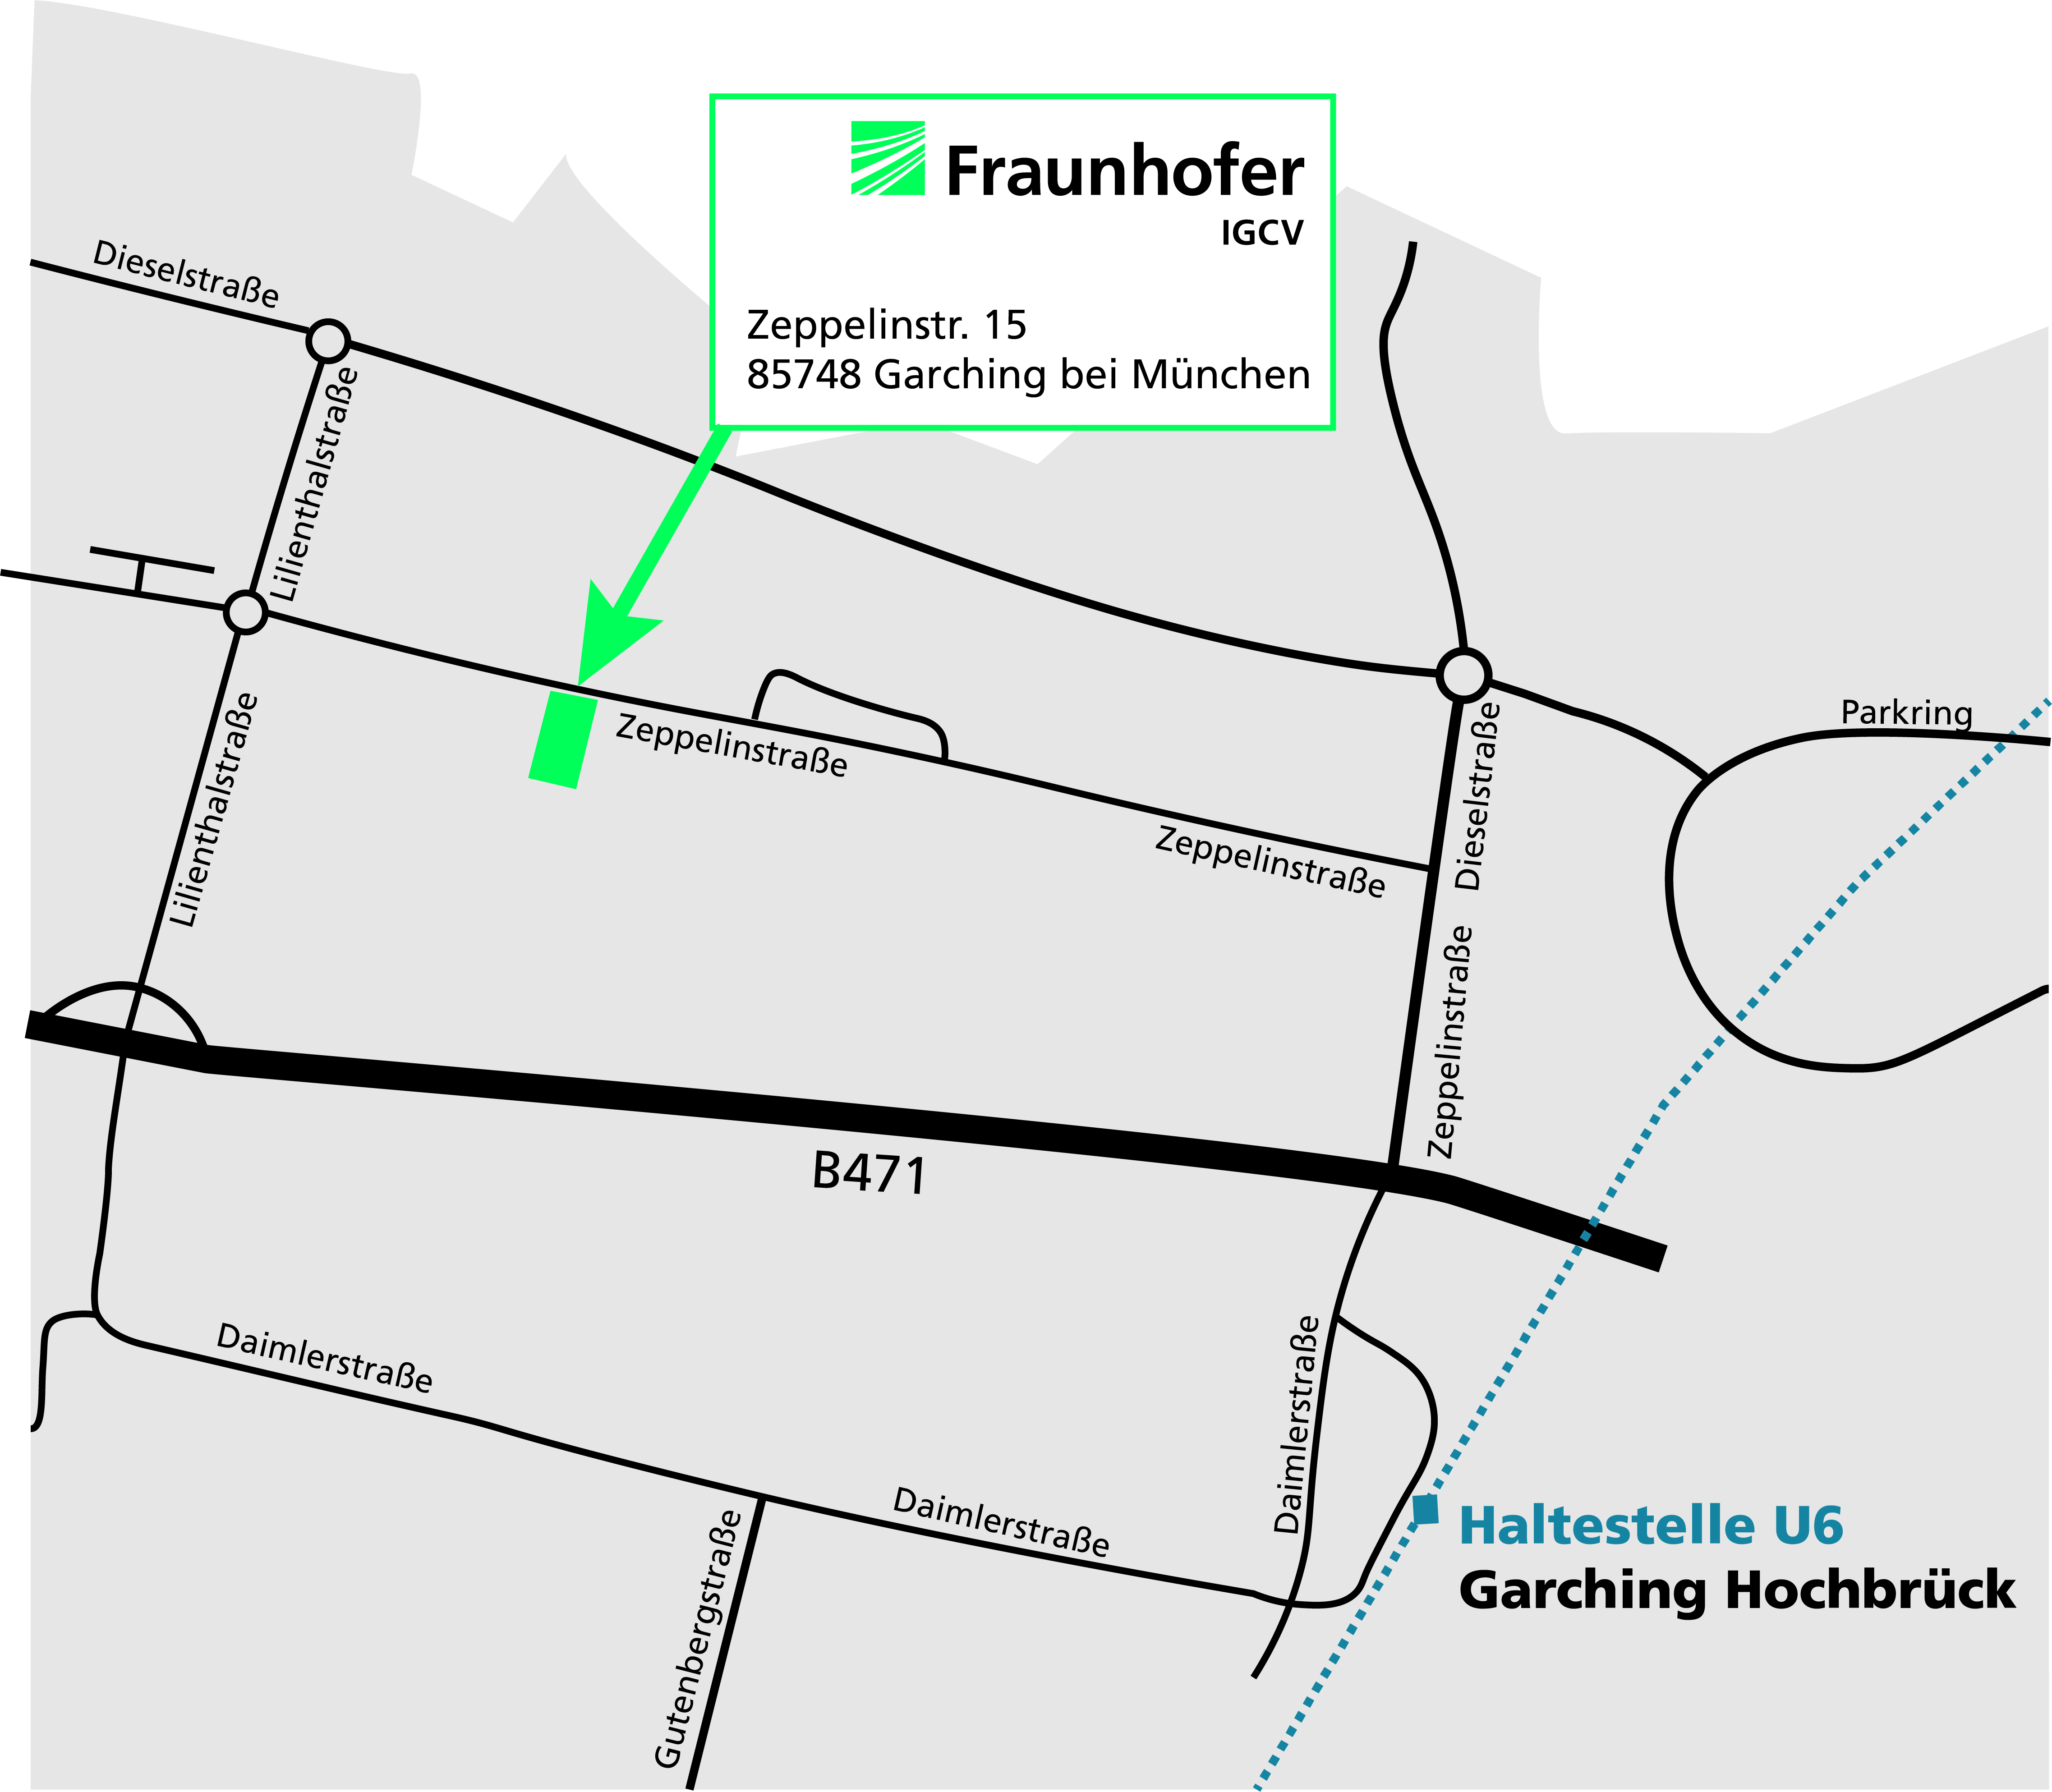 Directions Fraunhofer IGCV Garching